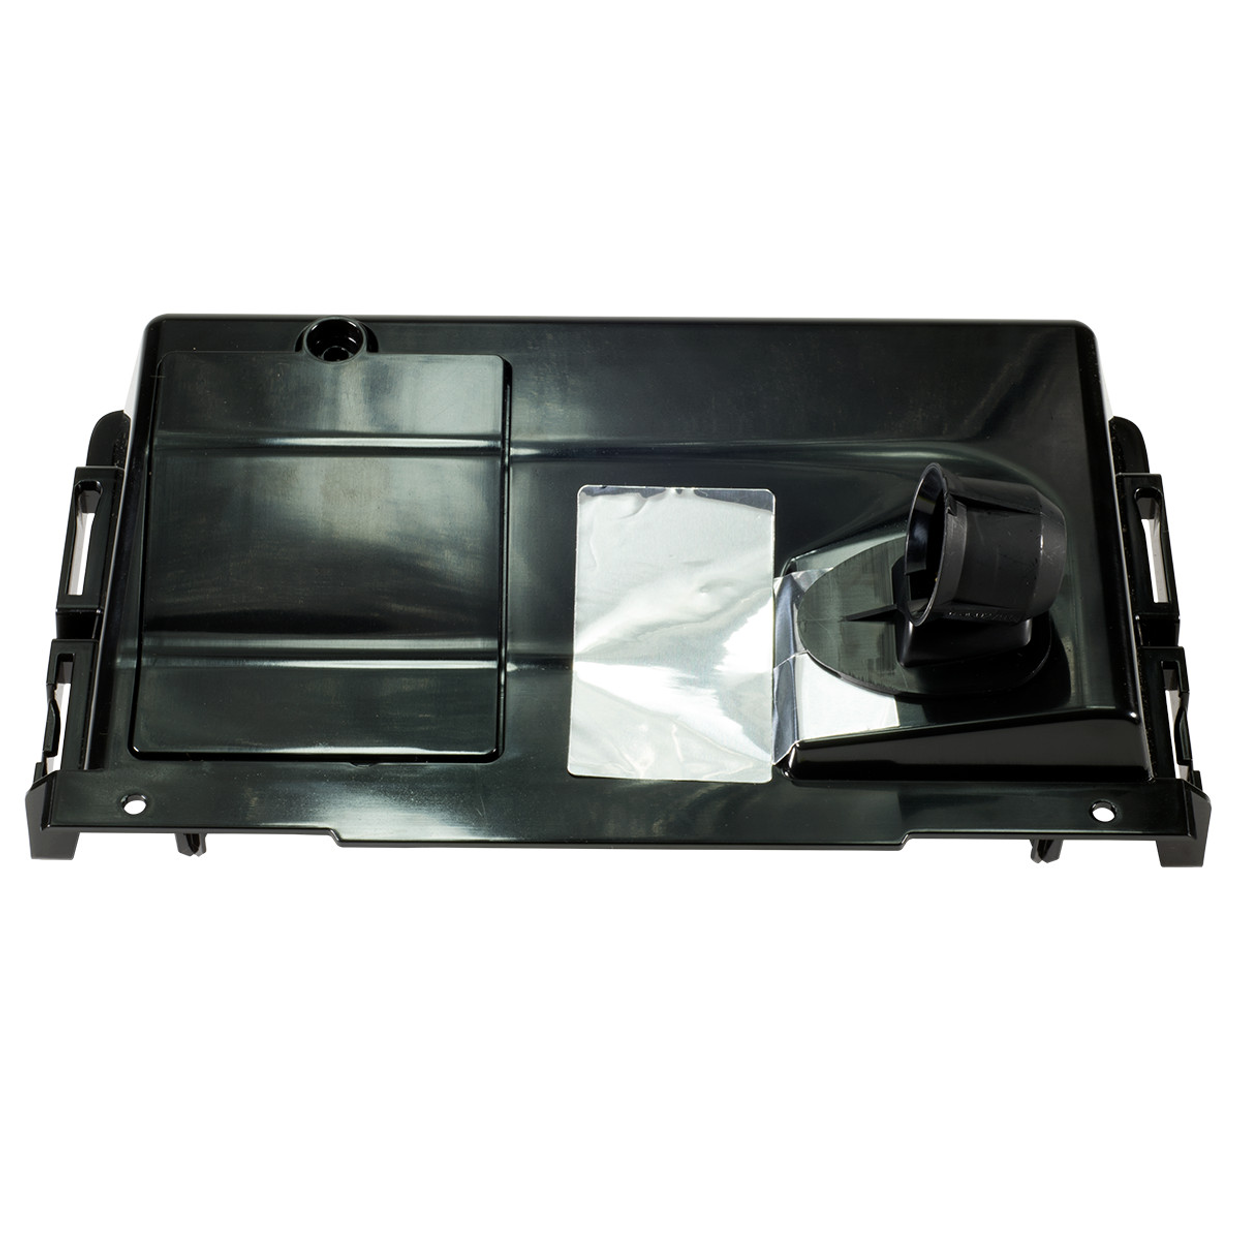 Best Chamberlain Garage Door Opener Manual Battery Replacement with Modern Design